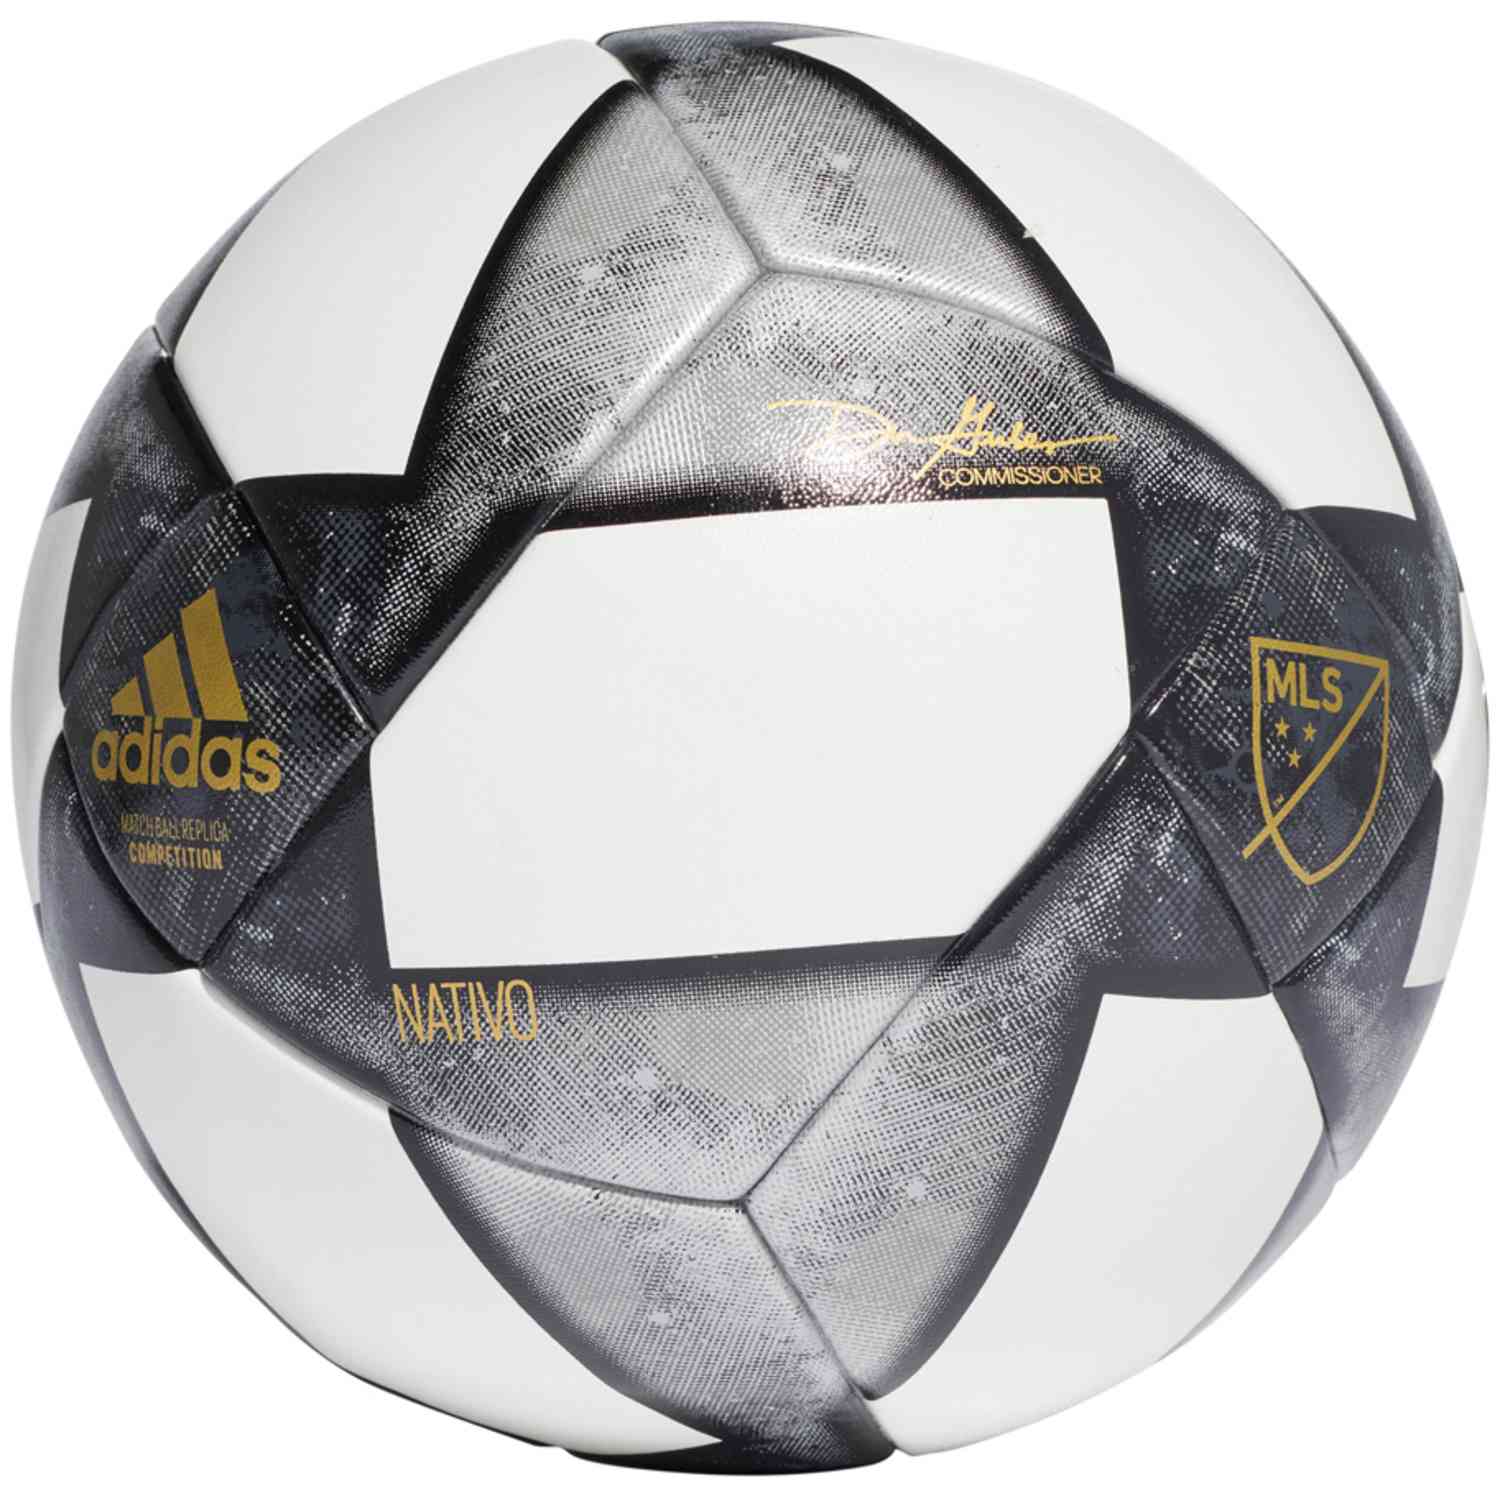 adidas nativo soccer ball